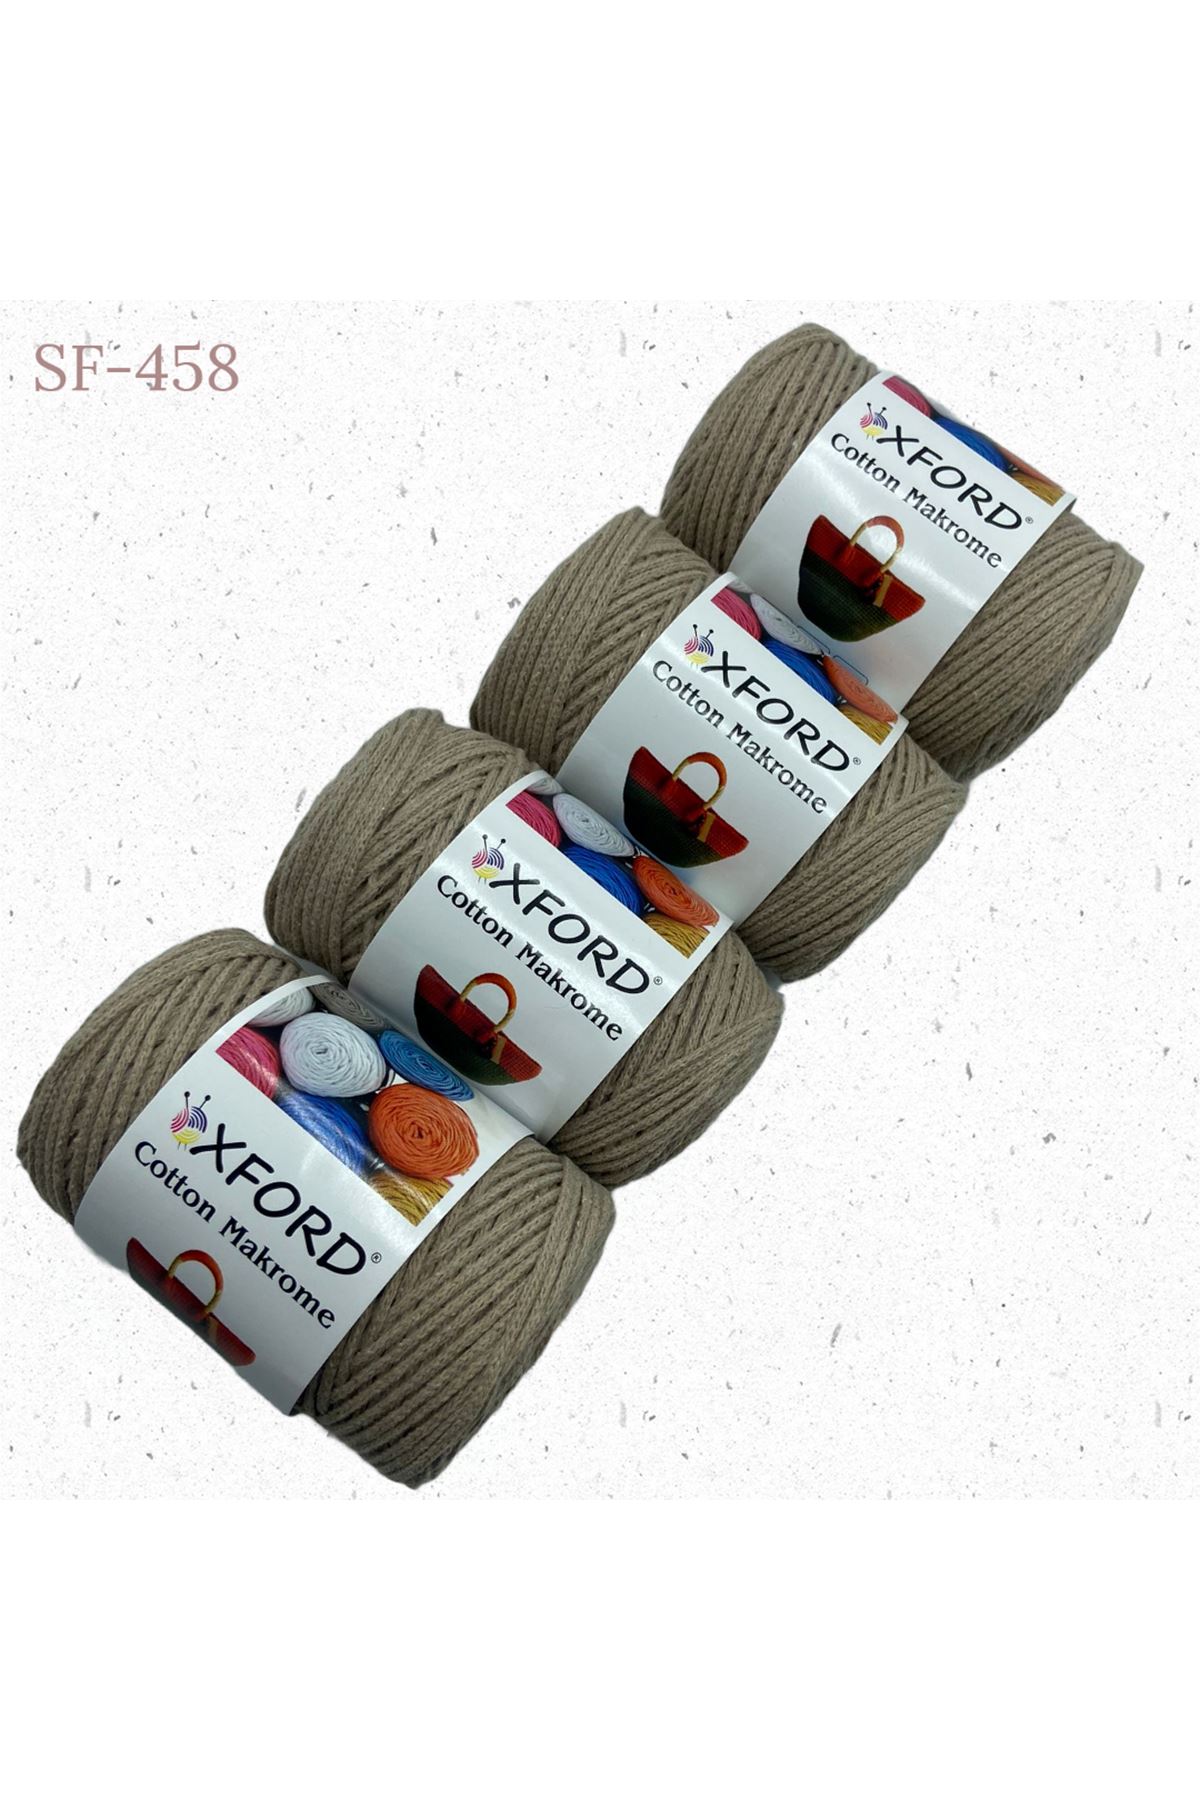 Stok Fazlası Cotton Makrome Mix 900 Gram SF458